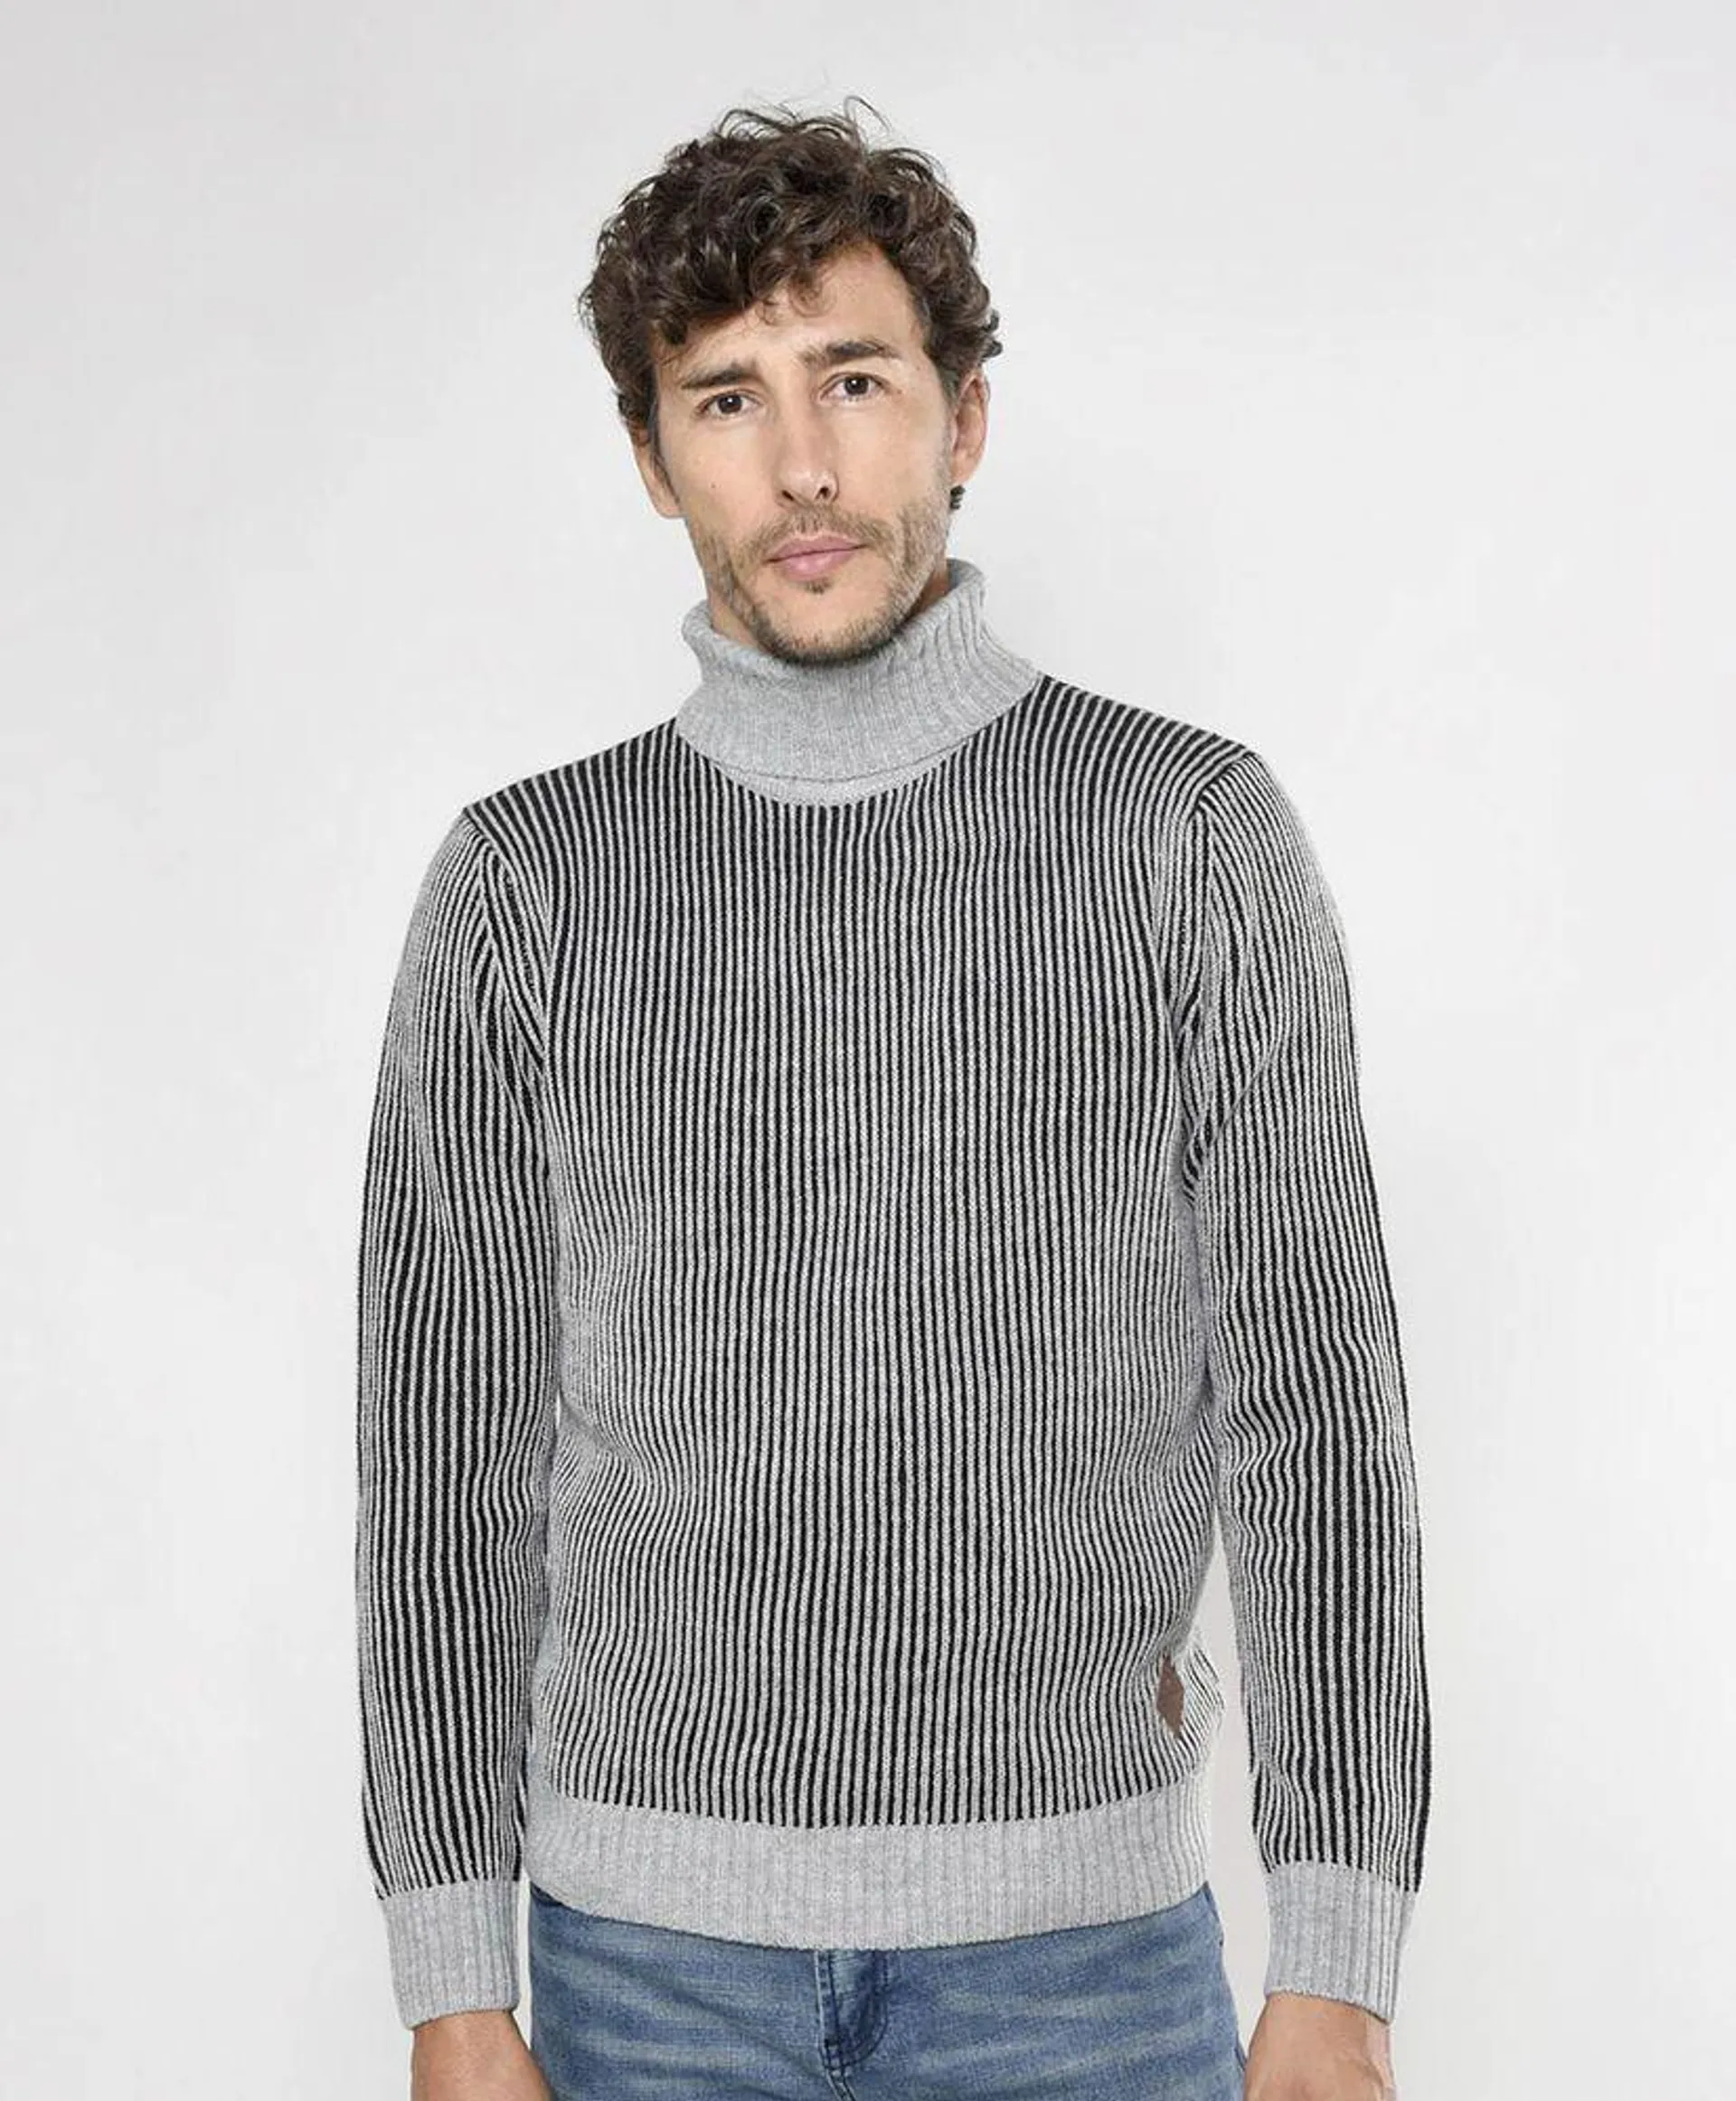 Sweater hombre beatle bicolor